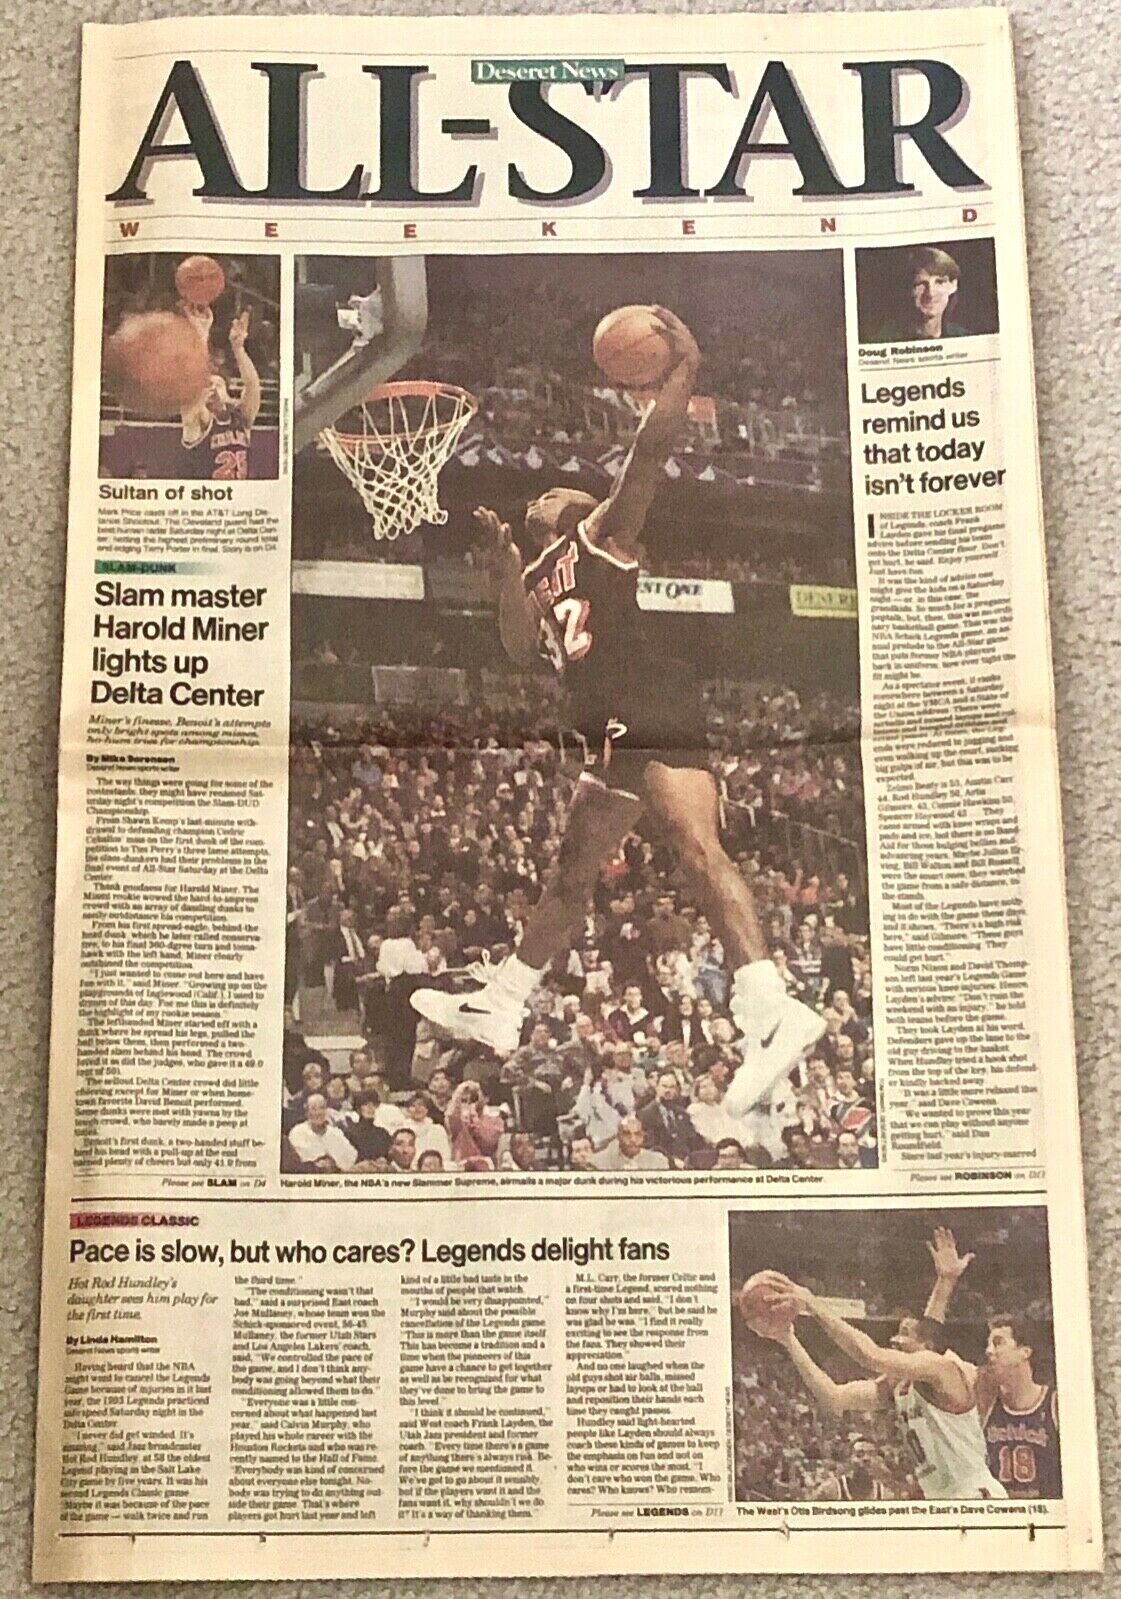 HAROLD MINER "BABY JORDAN" WINS 1993 NBA SLAM DUNK TITLE- UTAH NEWSPAPERS (2) Deseret News + Salt Lake Tribune - фотография #2